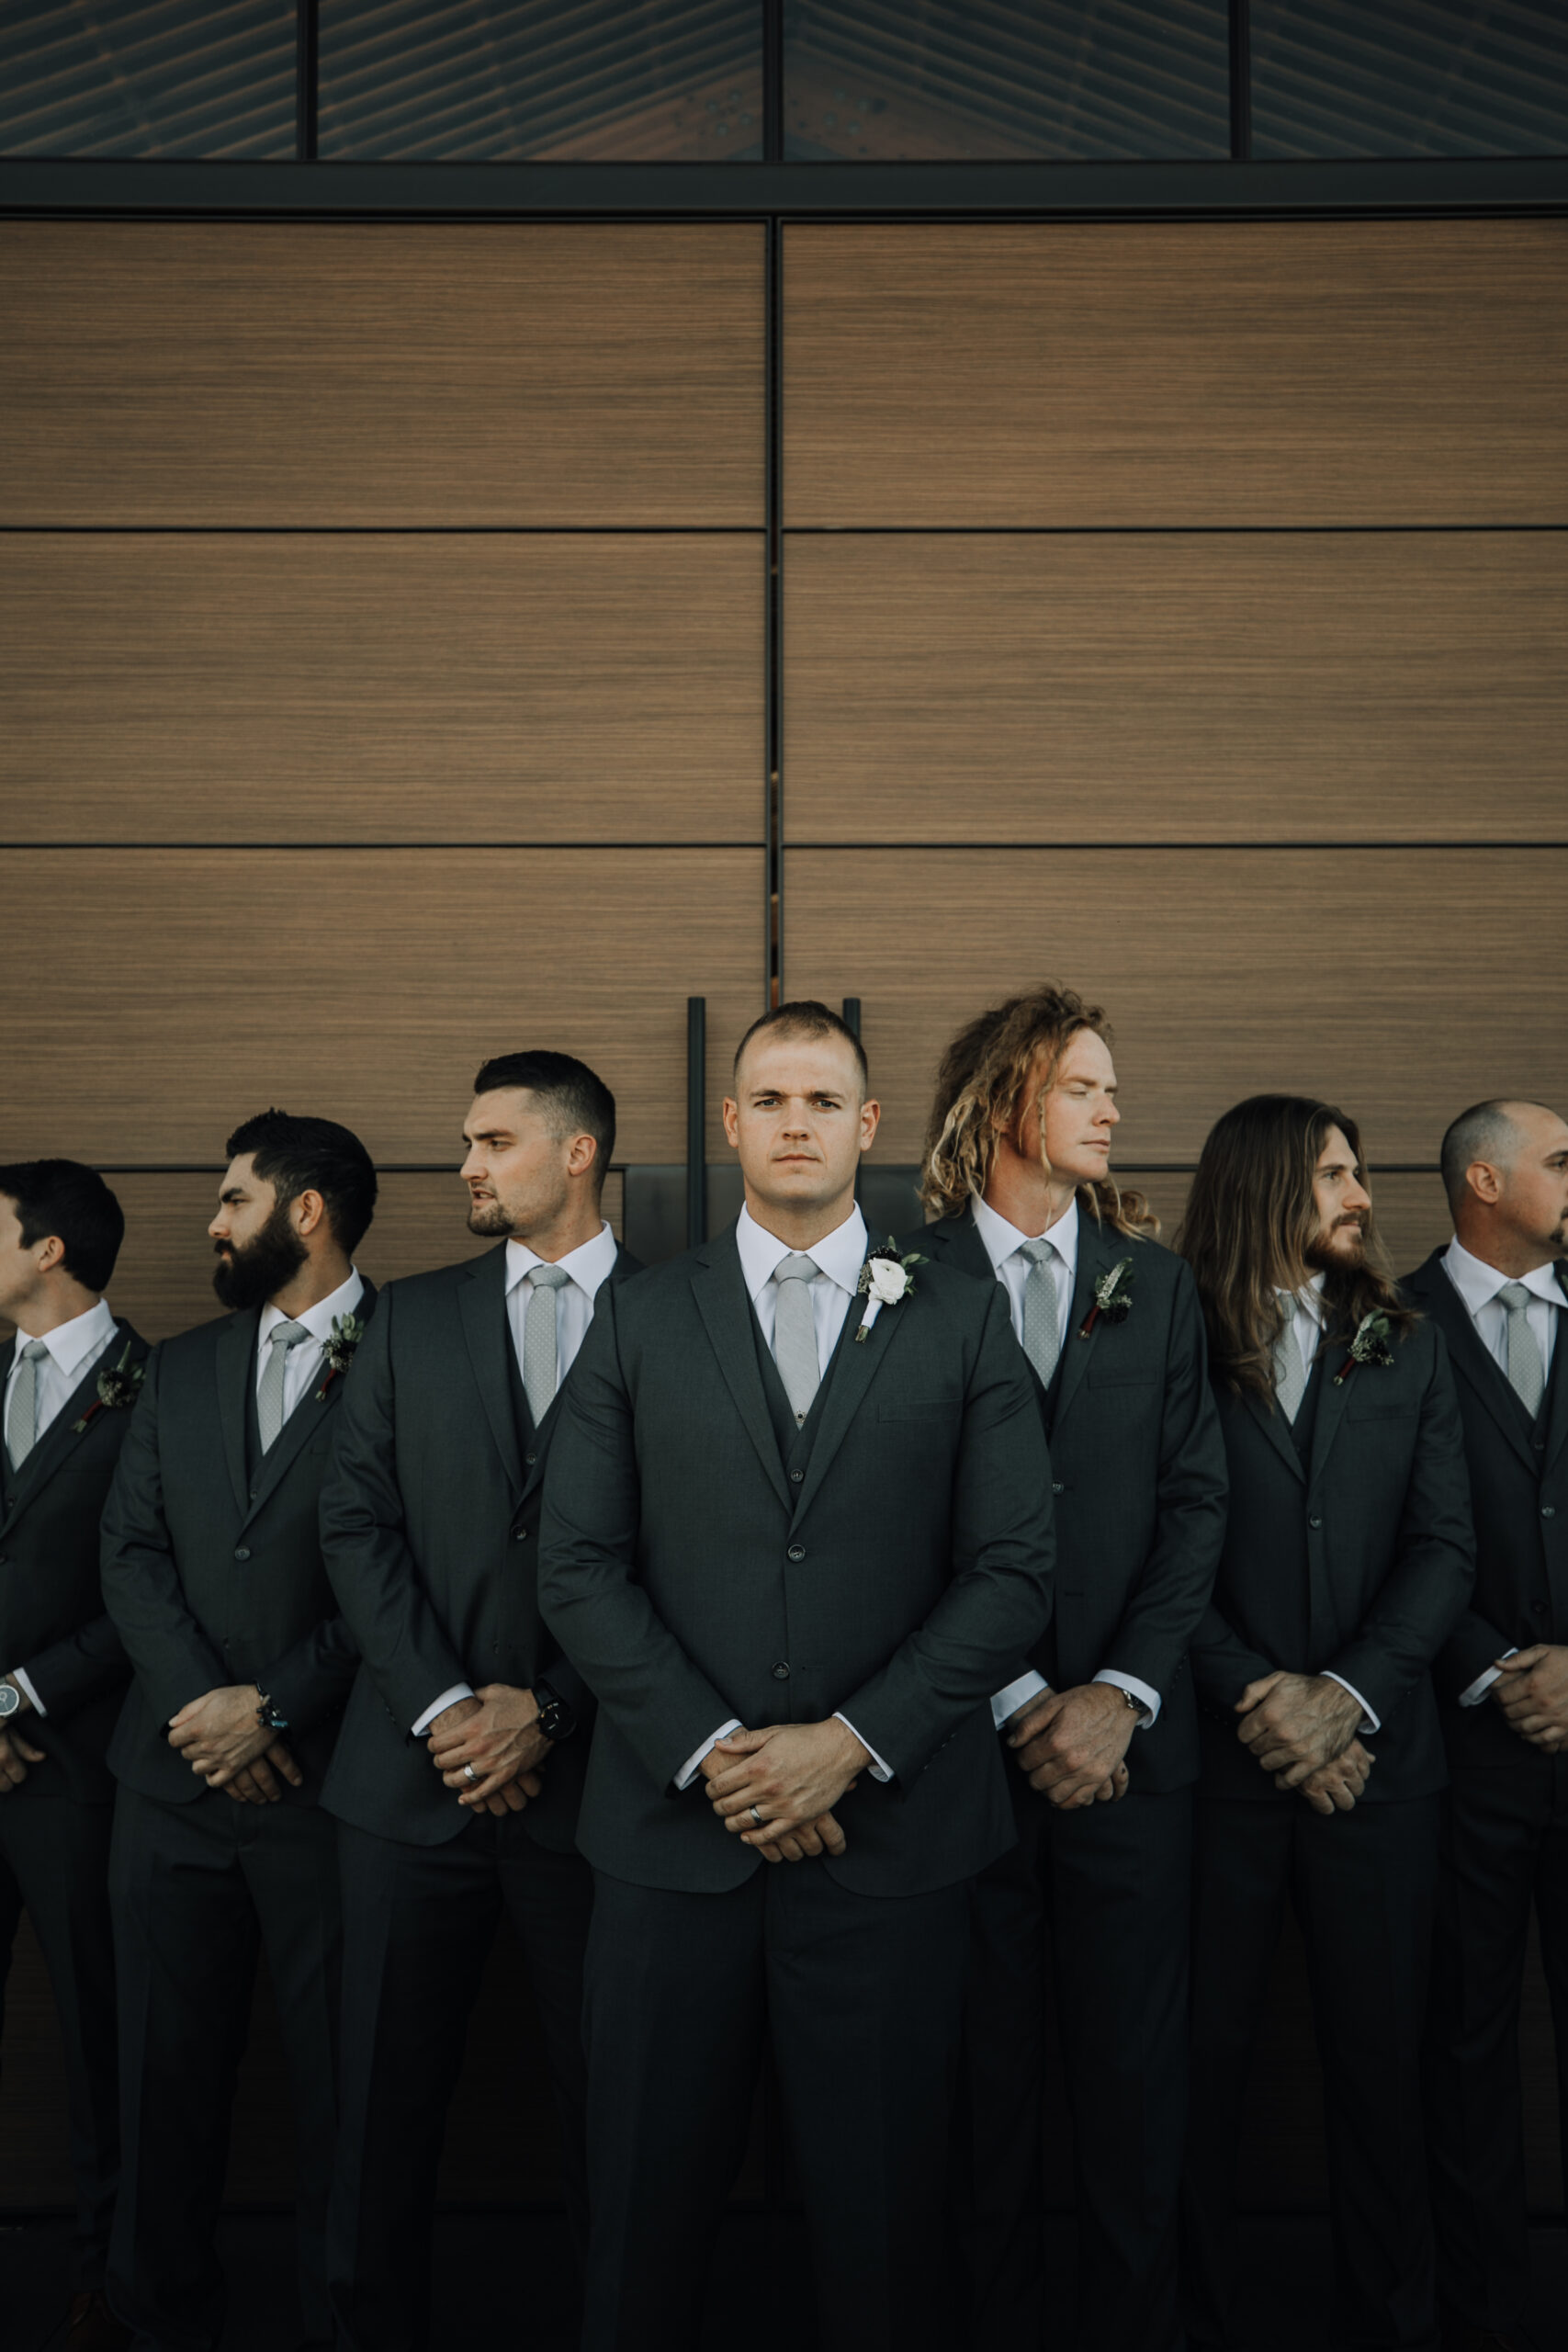 Groomsmen pose in their wedding guest attire suits